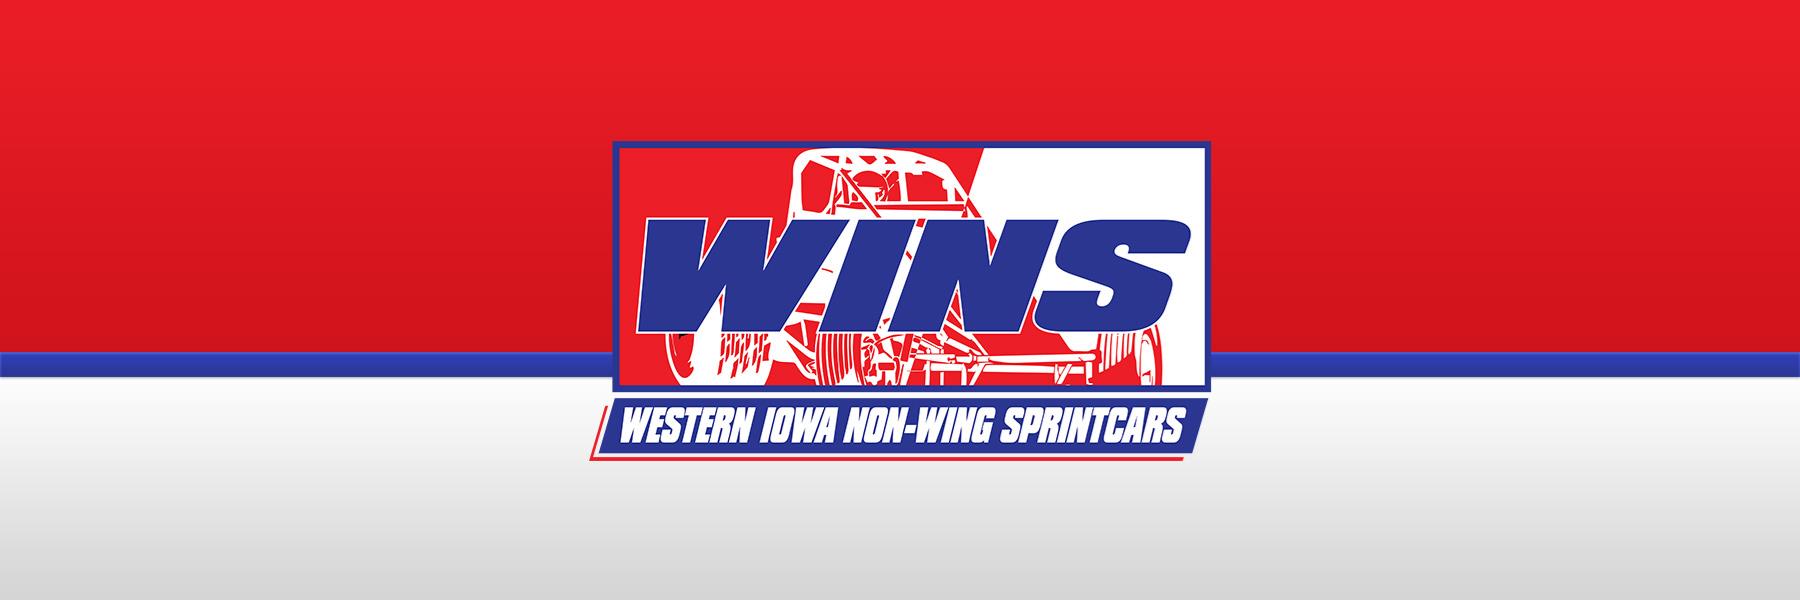 Western Iowa Non-Wing Sprints - WINS